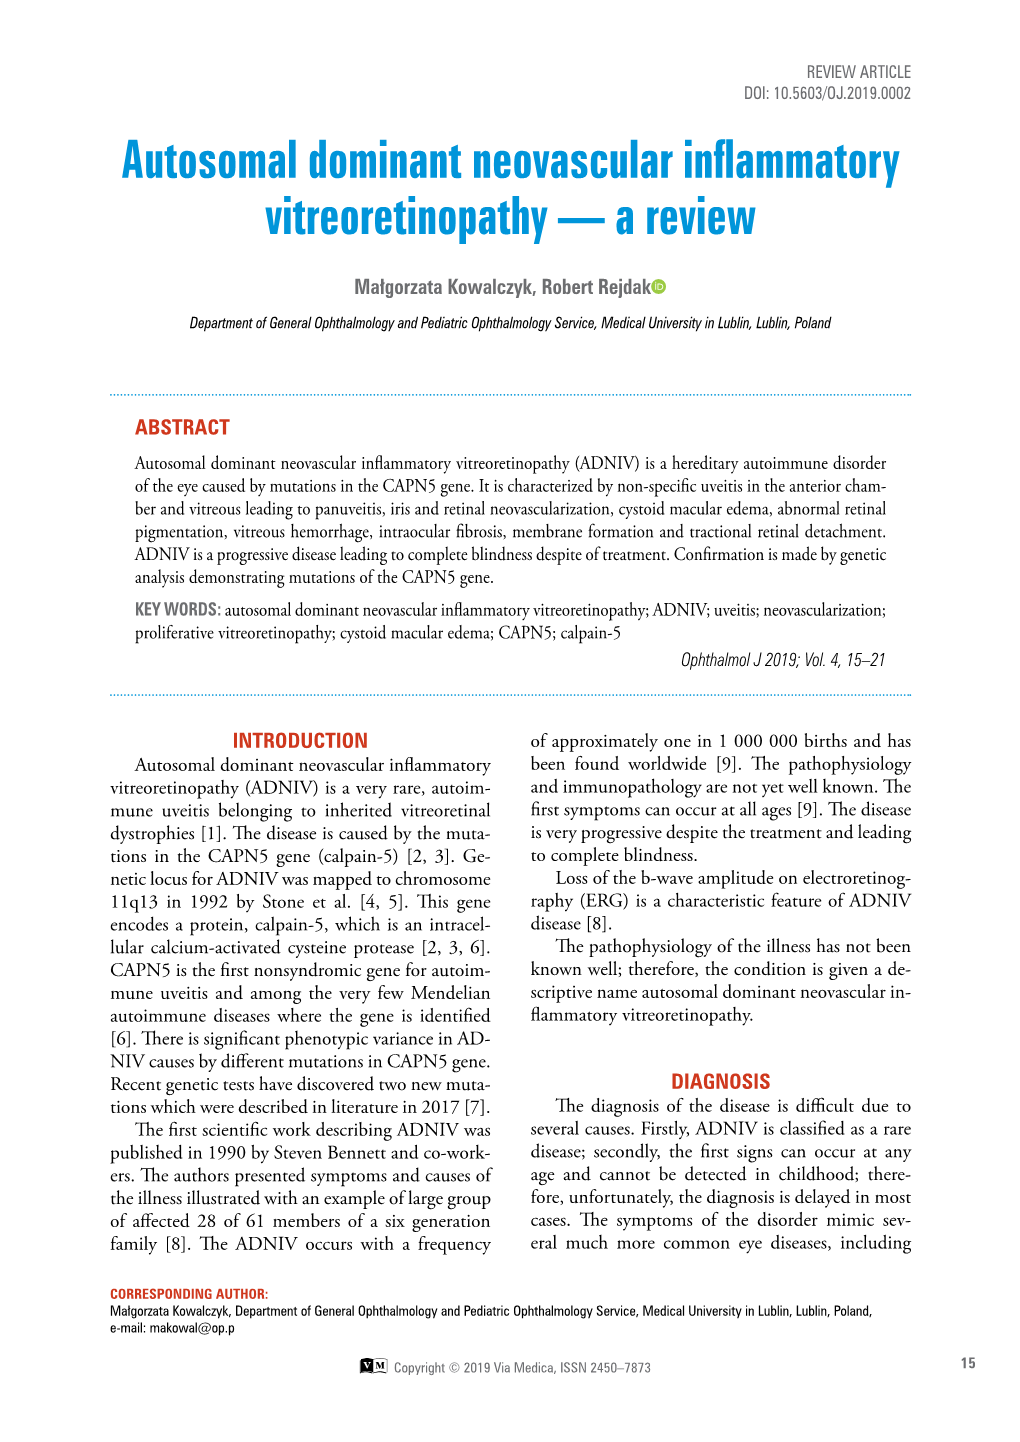 Autosomal Dominant Neovascular Inflammatory Vitreoretinopathy — a Review